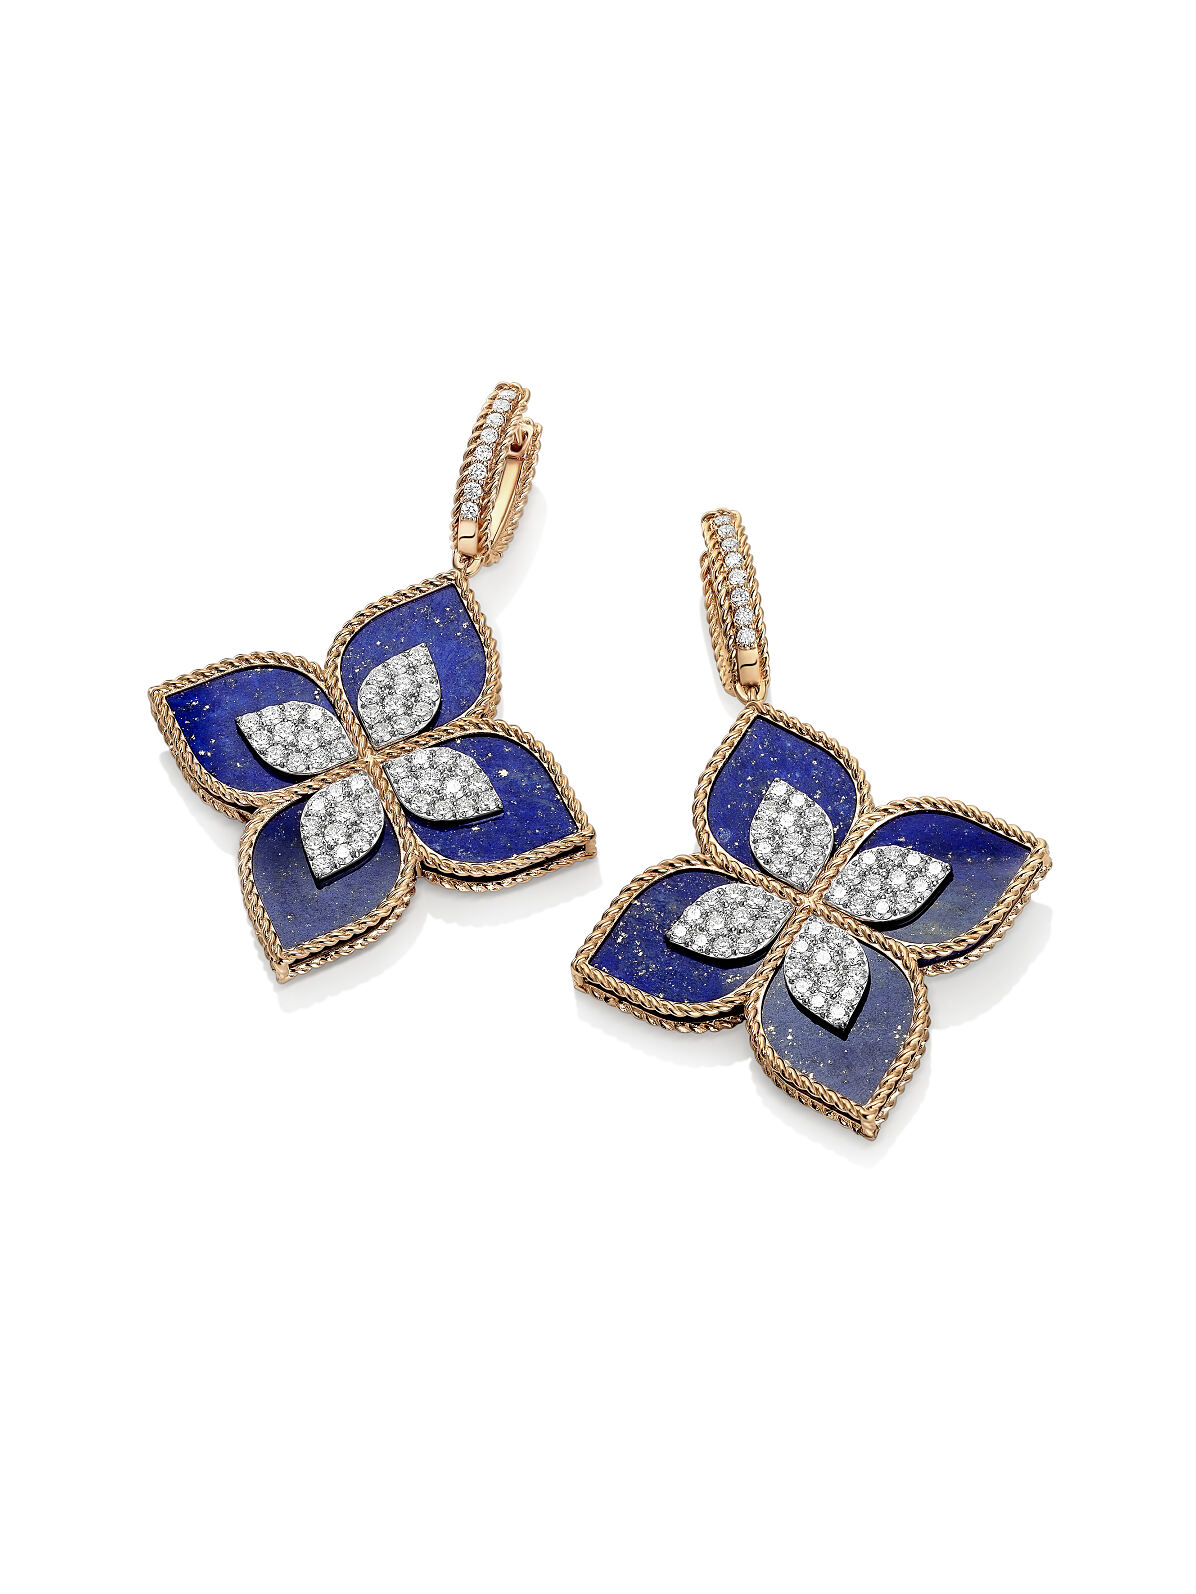 JUWELIER KRUZIK_Roberto Coin_Kollektion Princess Flower_Rose gold earrings with lapis lazuli and diamonds_Preis auf Anfrage